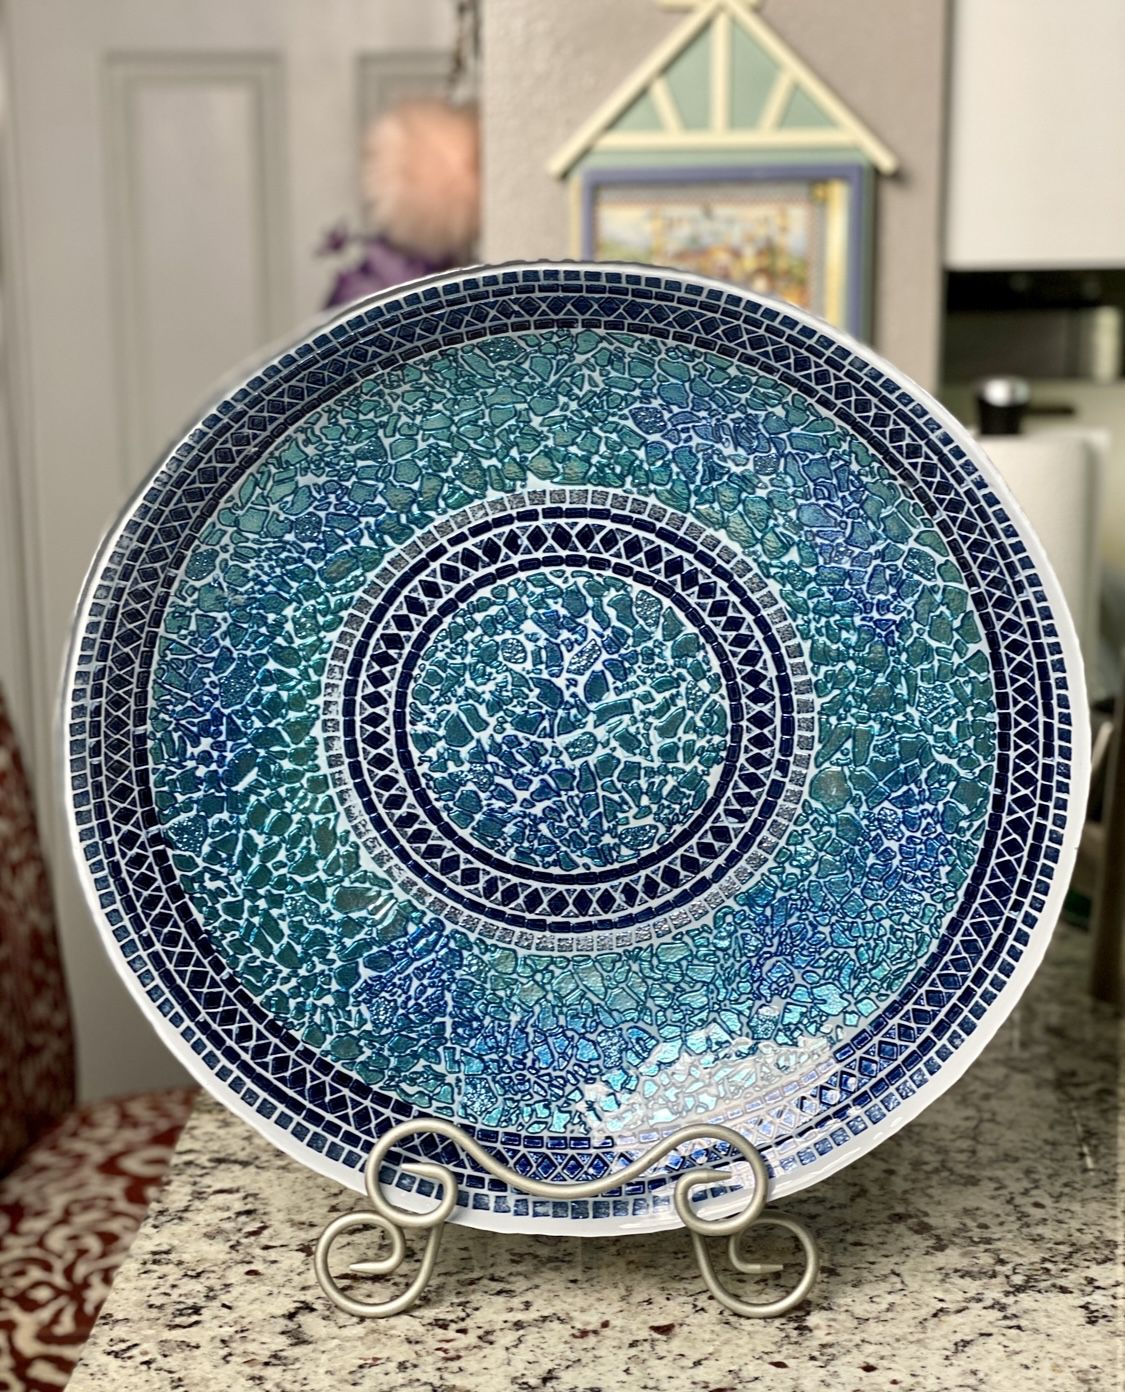 Decor Plate $25